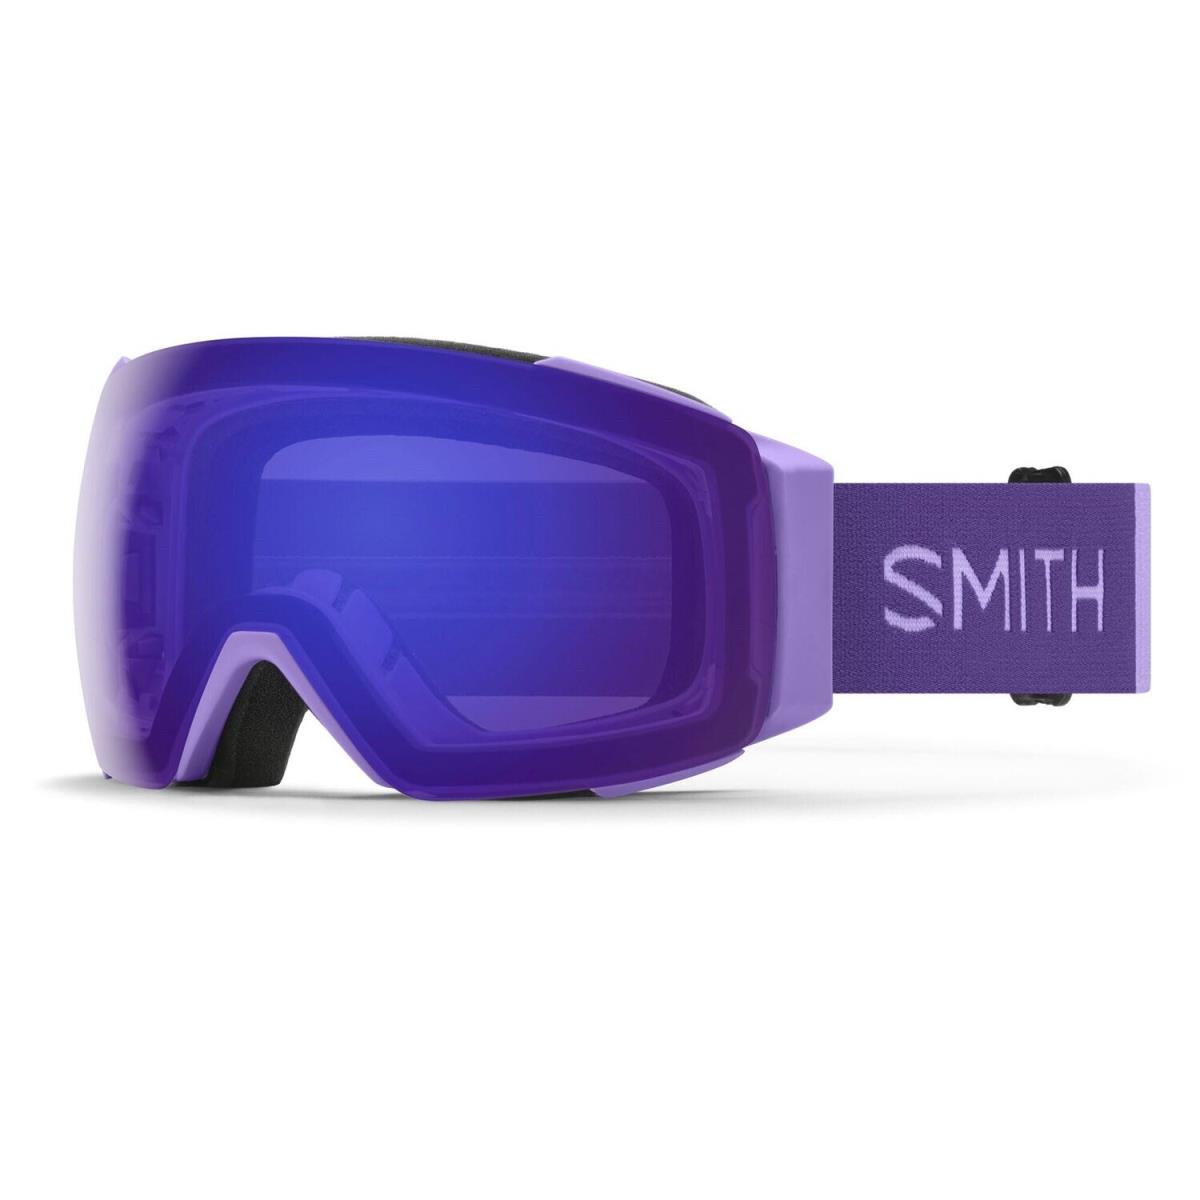 Smith I/o Mag Ski / Snow Goggles Peri Dust Everyday Violet Mirror Lens + Bonus